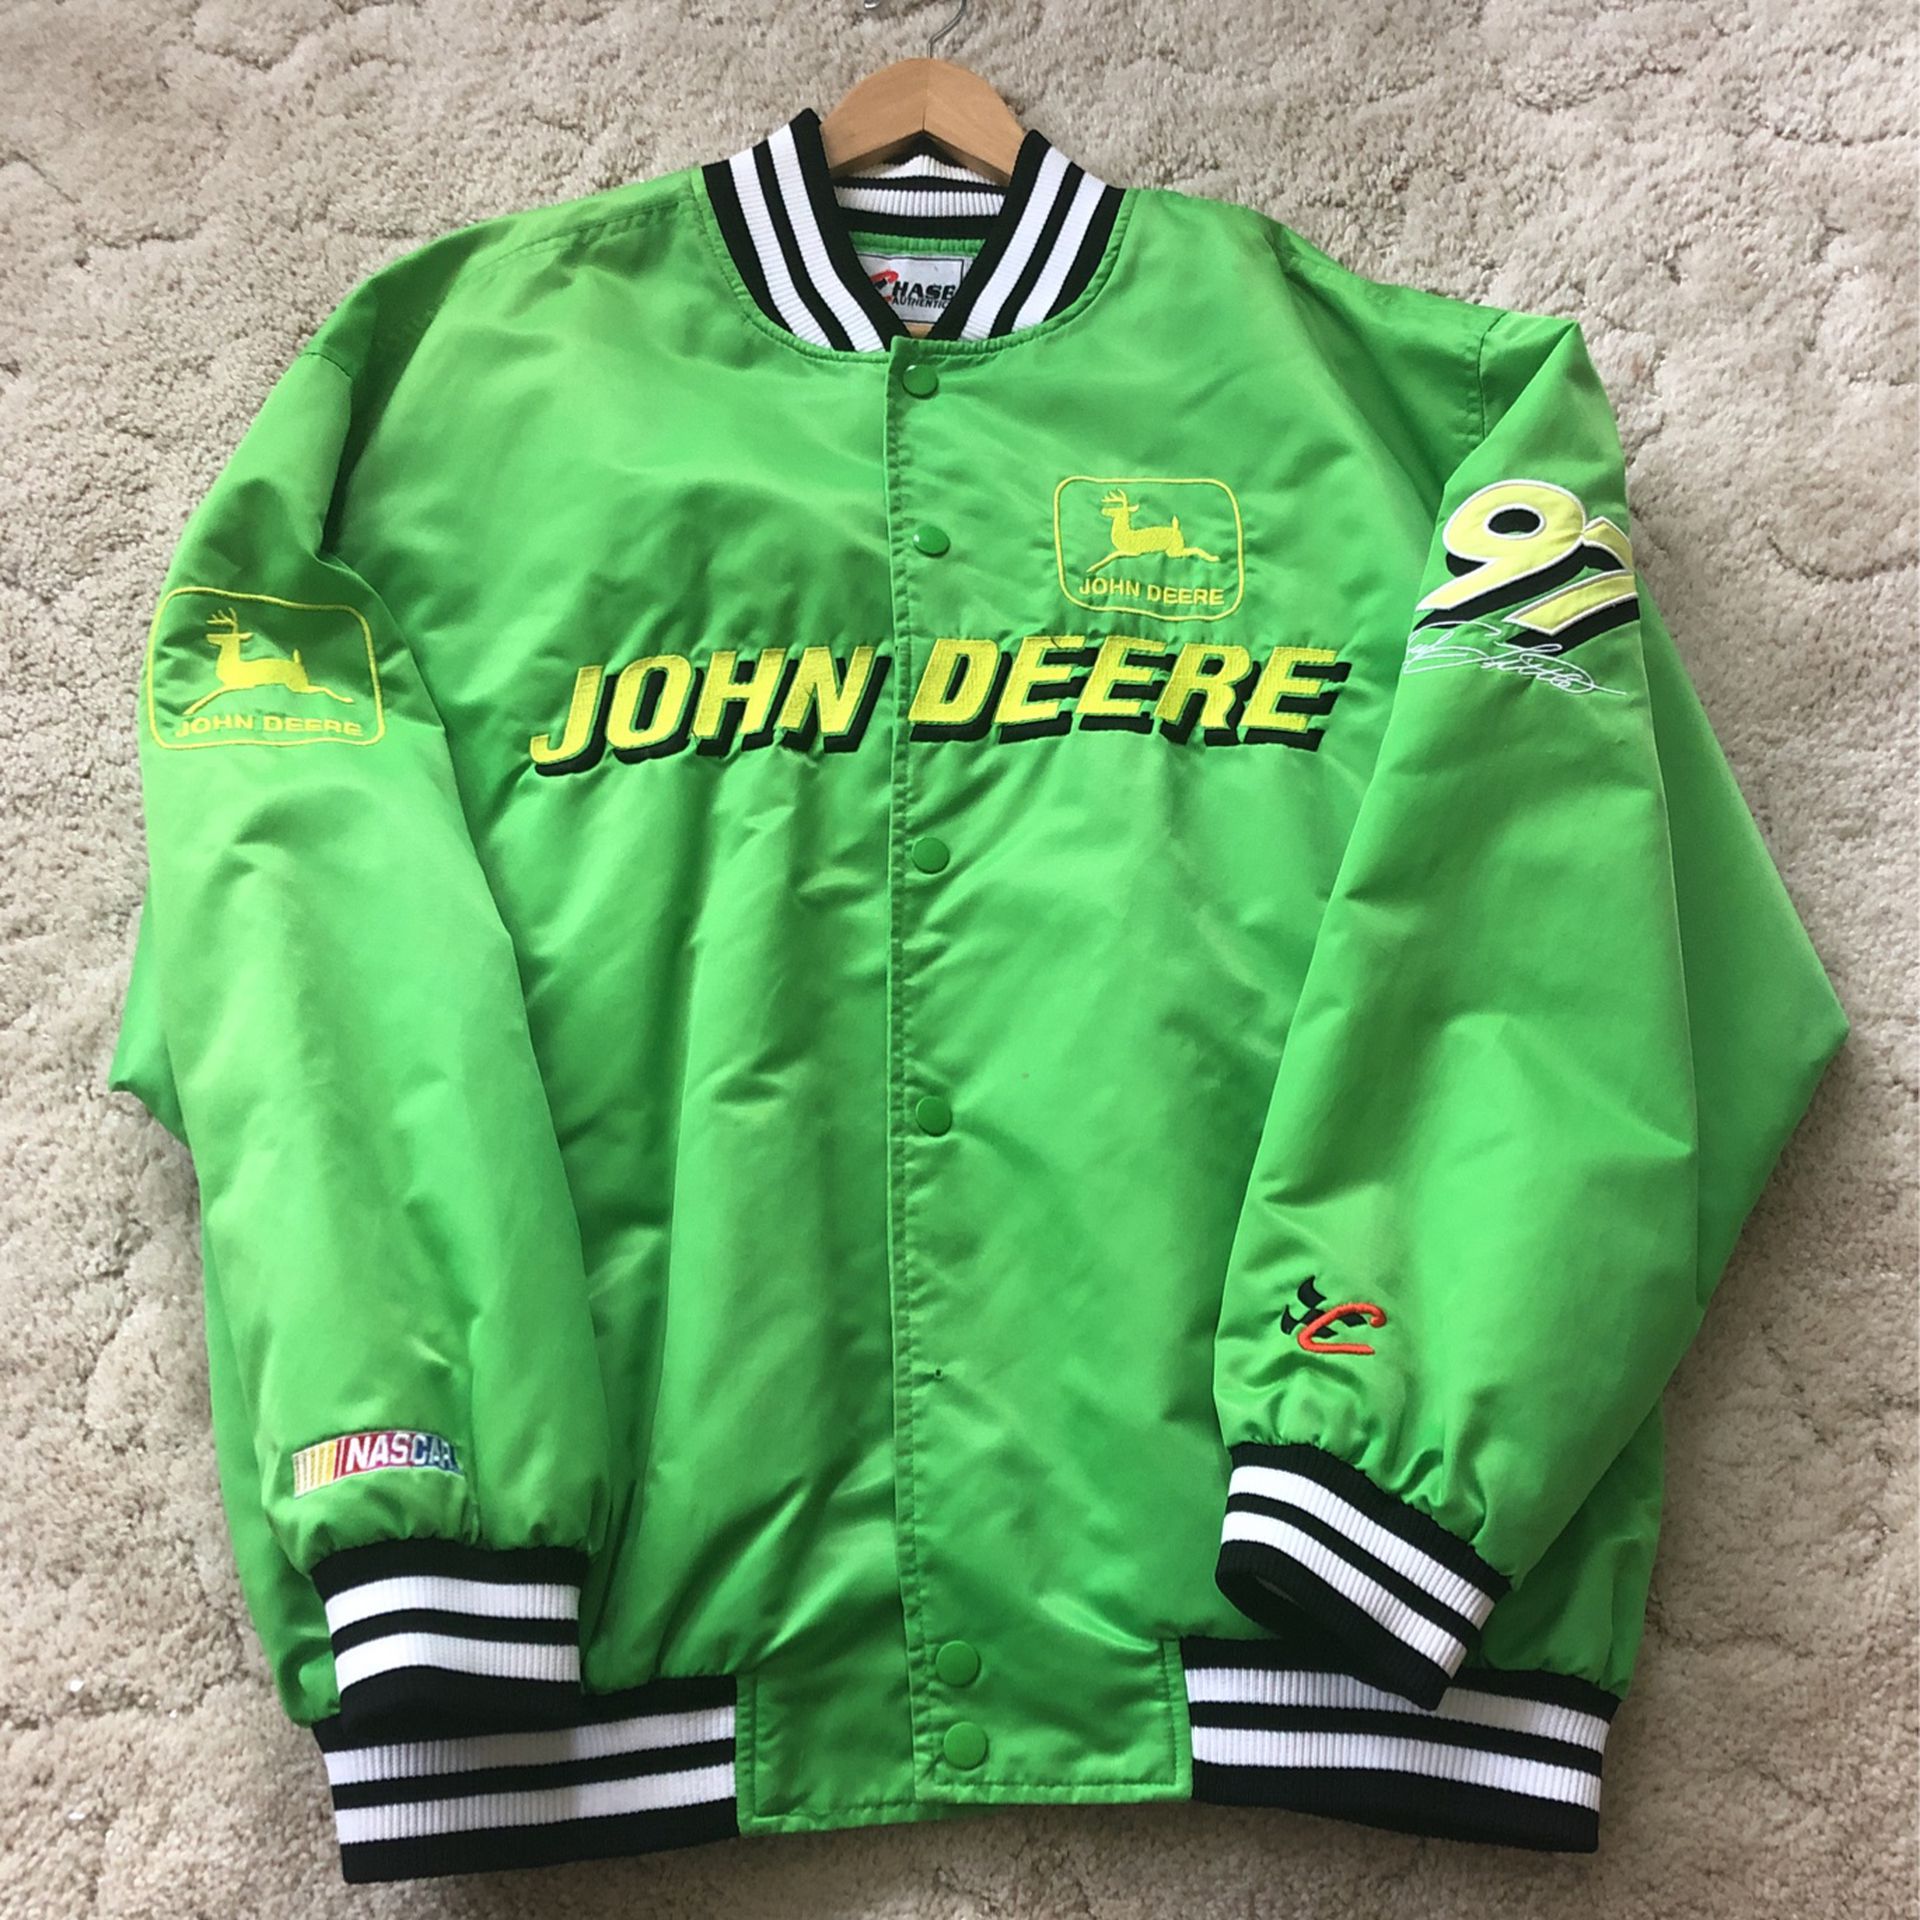 Men’s XL John Deer NASCAR Jacket $35